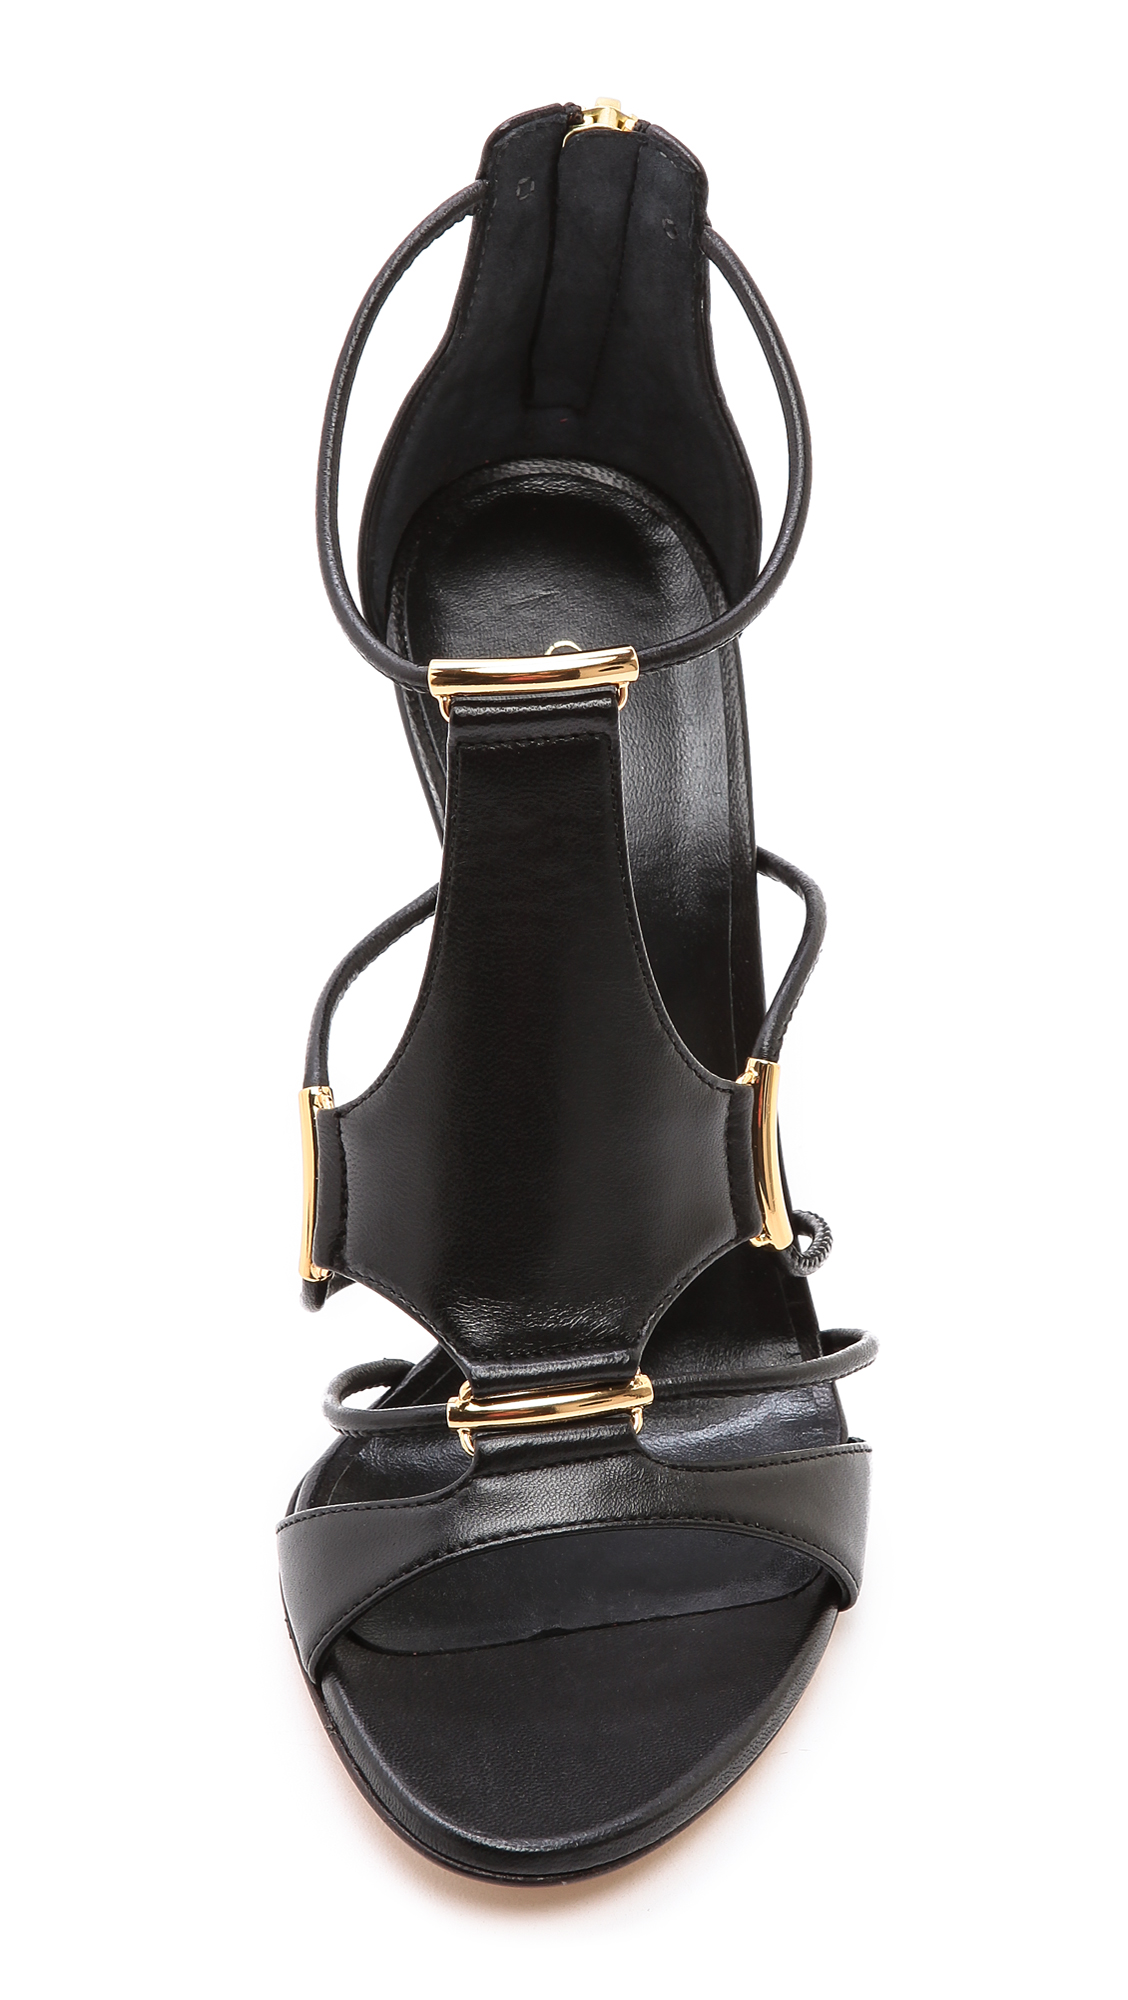 Lyst - Casadei Strappy Stiletto Sandals in Black